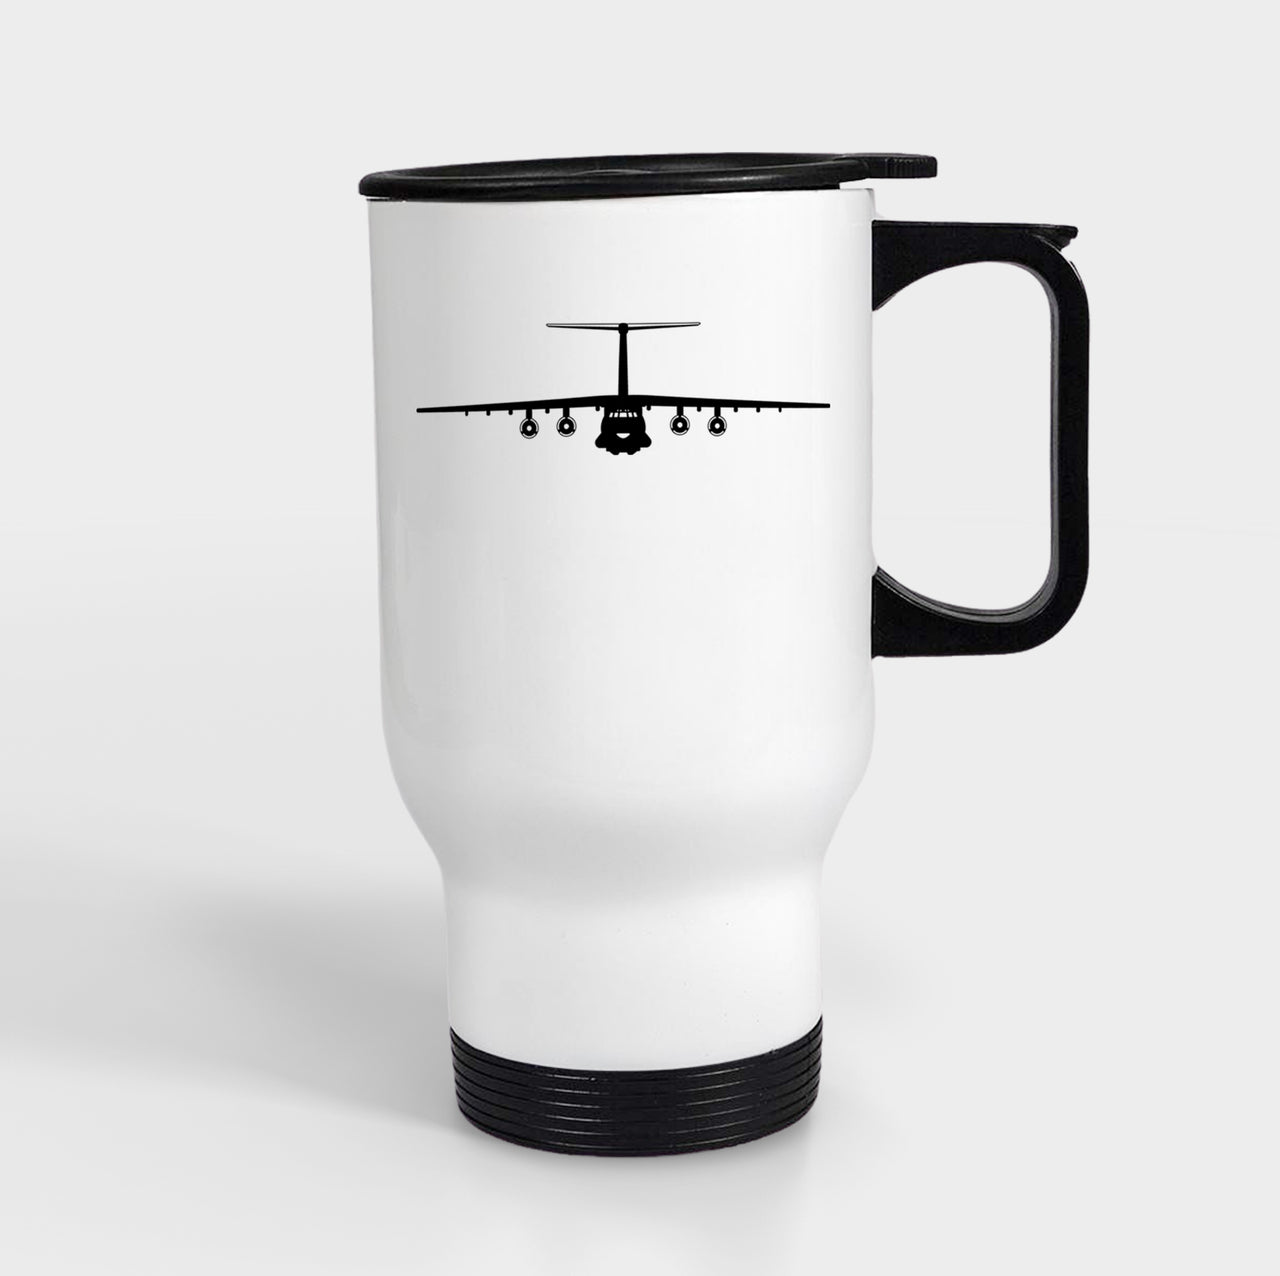 Ilyushin IL-76 Silhouette Designed Travel Mugs (With Holder)